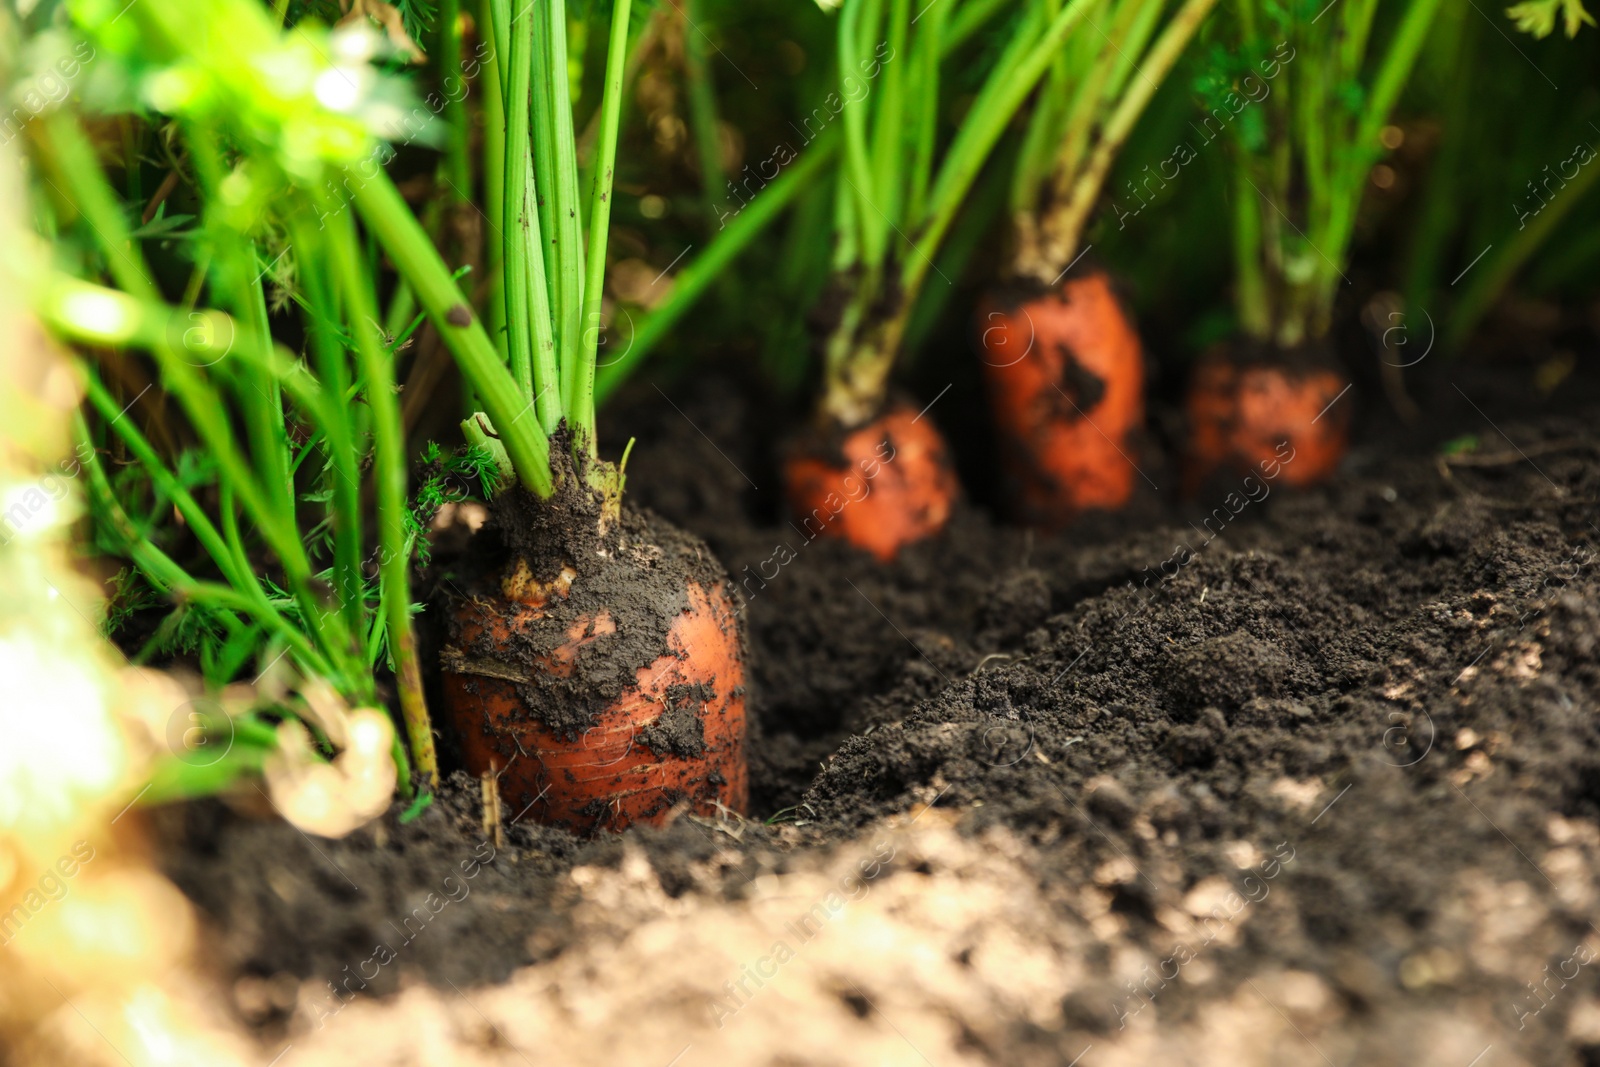 Photo of Ripe carrots growing in soil, closeup. Organic farming